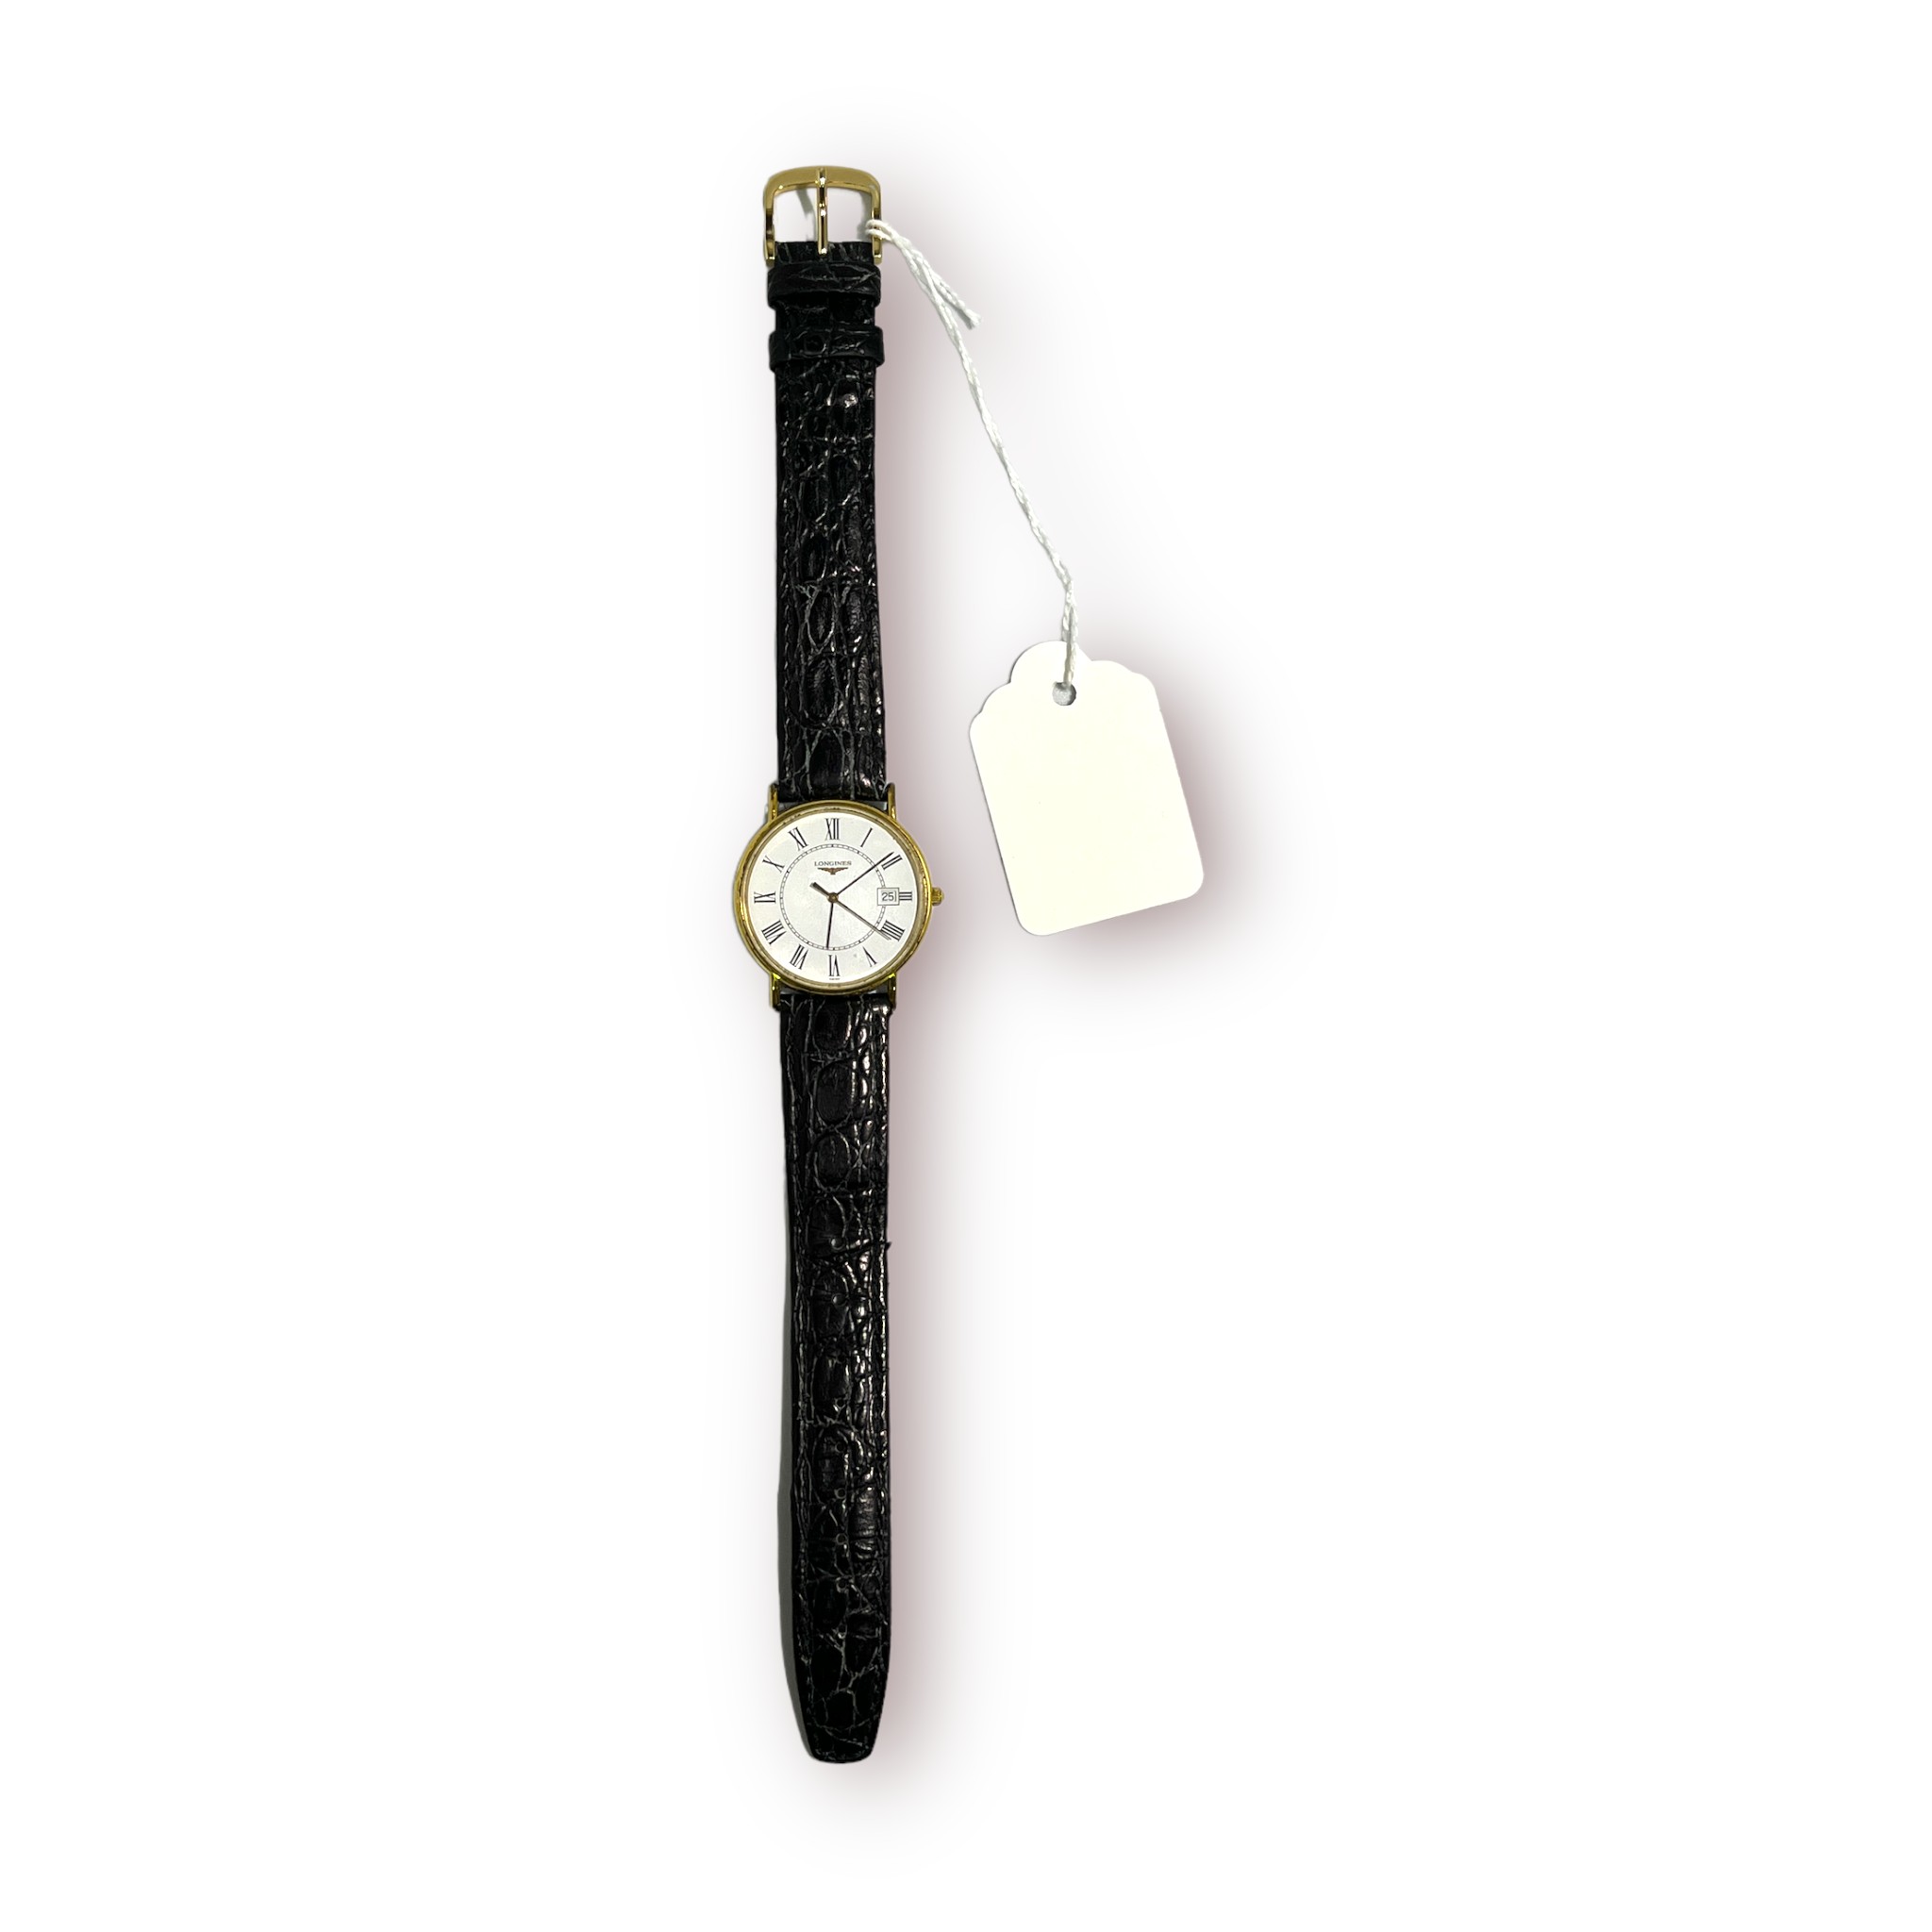 A gents gold-plated quartz Longines model L4.636.2 wristwatch, the white enamel dial with Roman